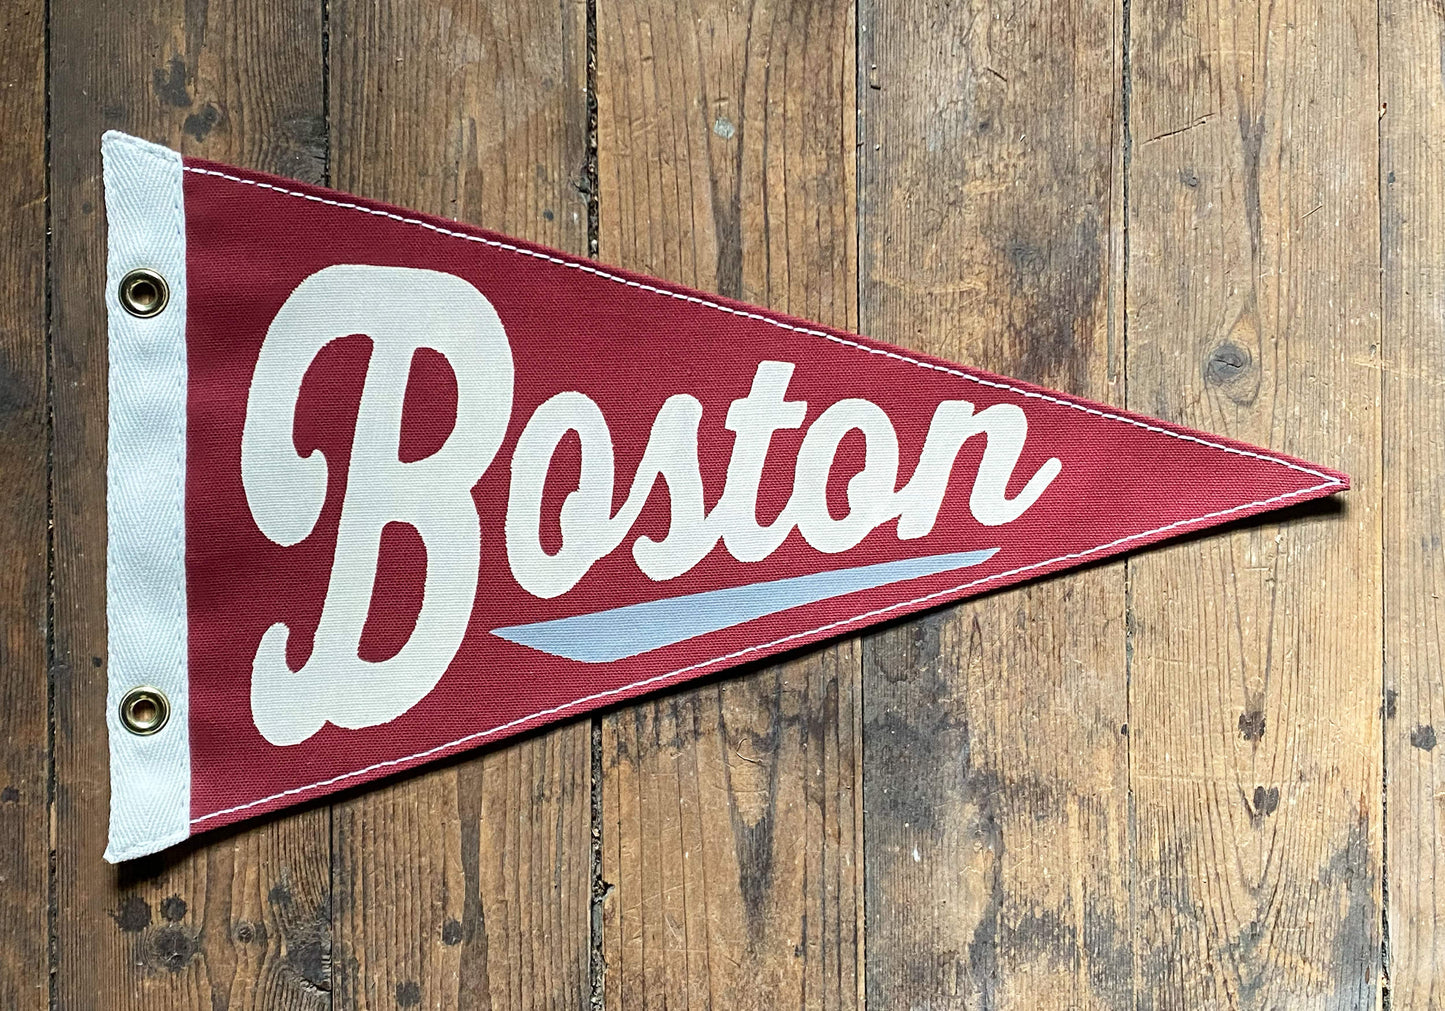 Boston Vintage-Inspired Pennant